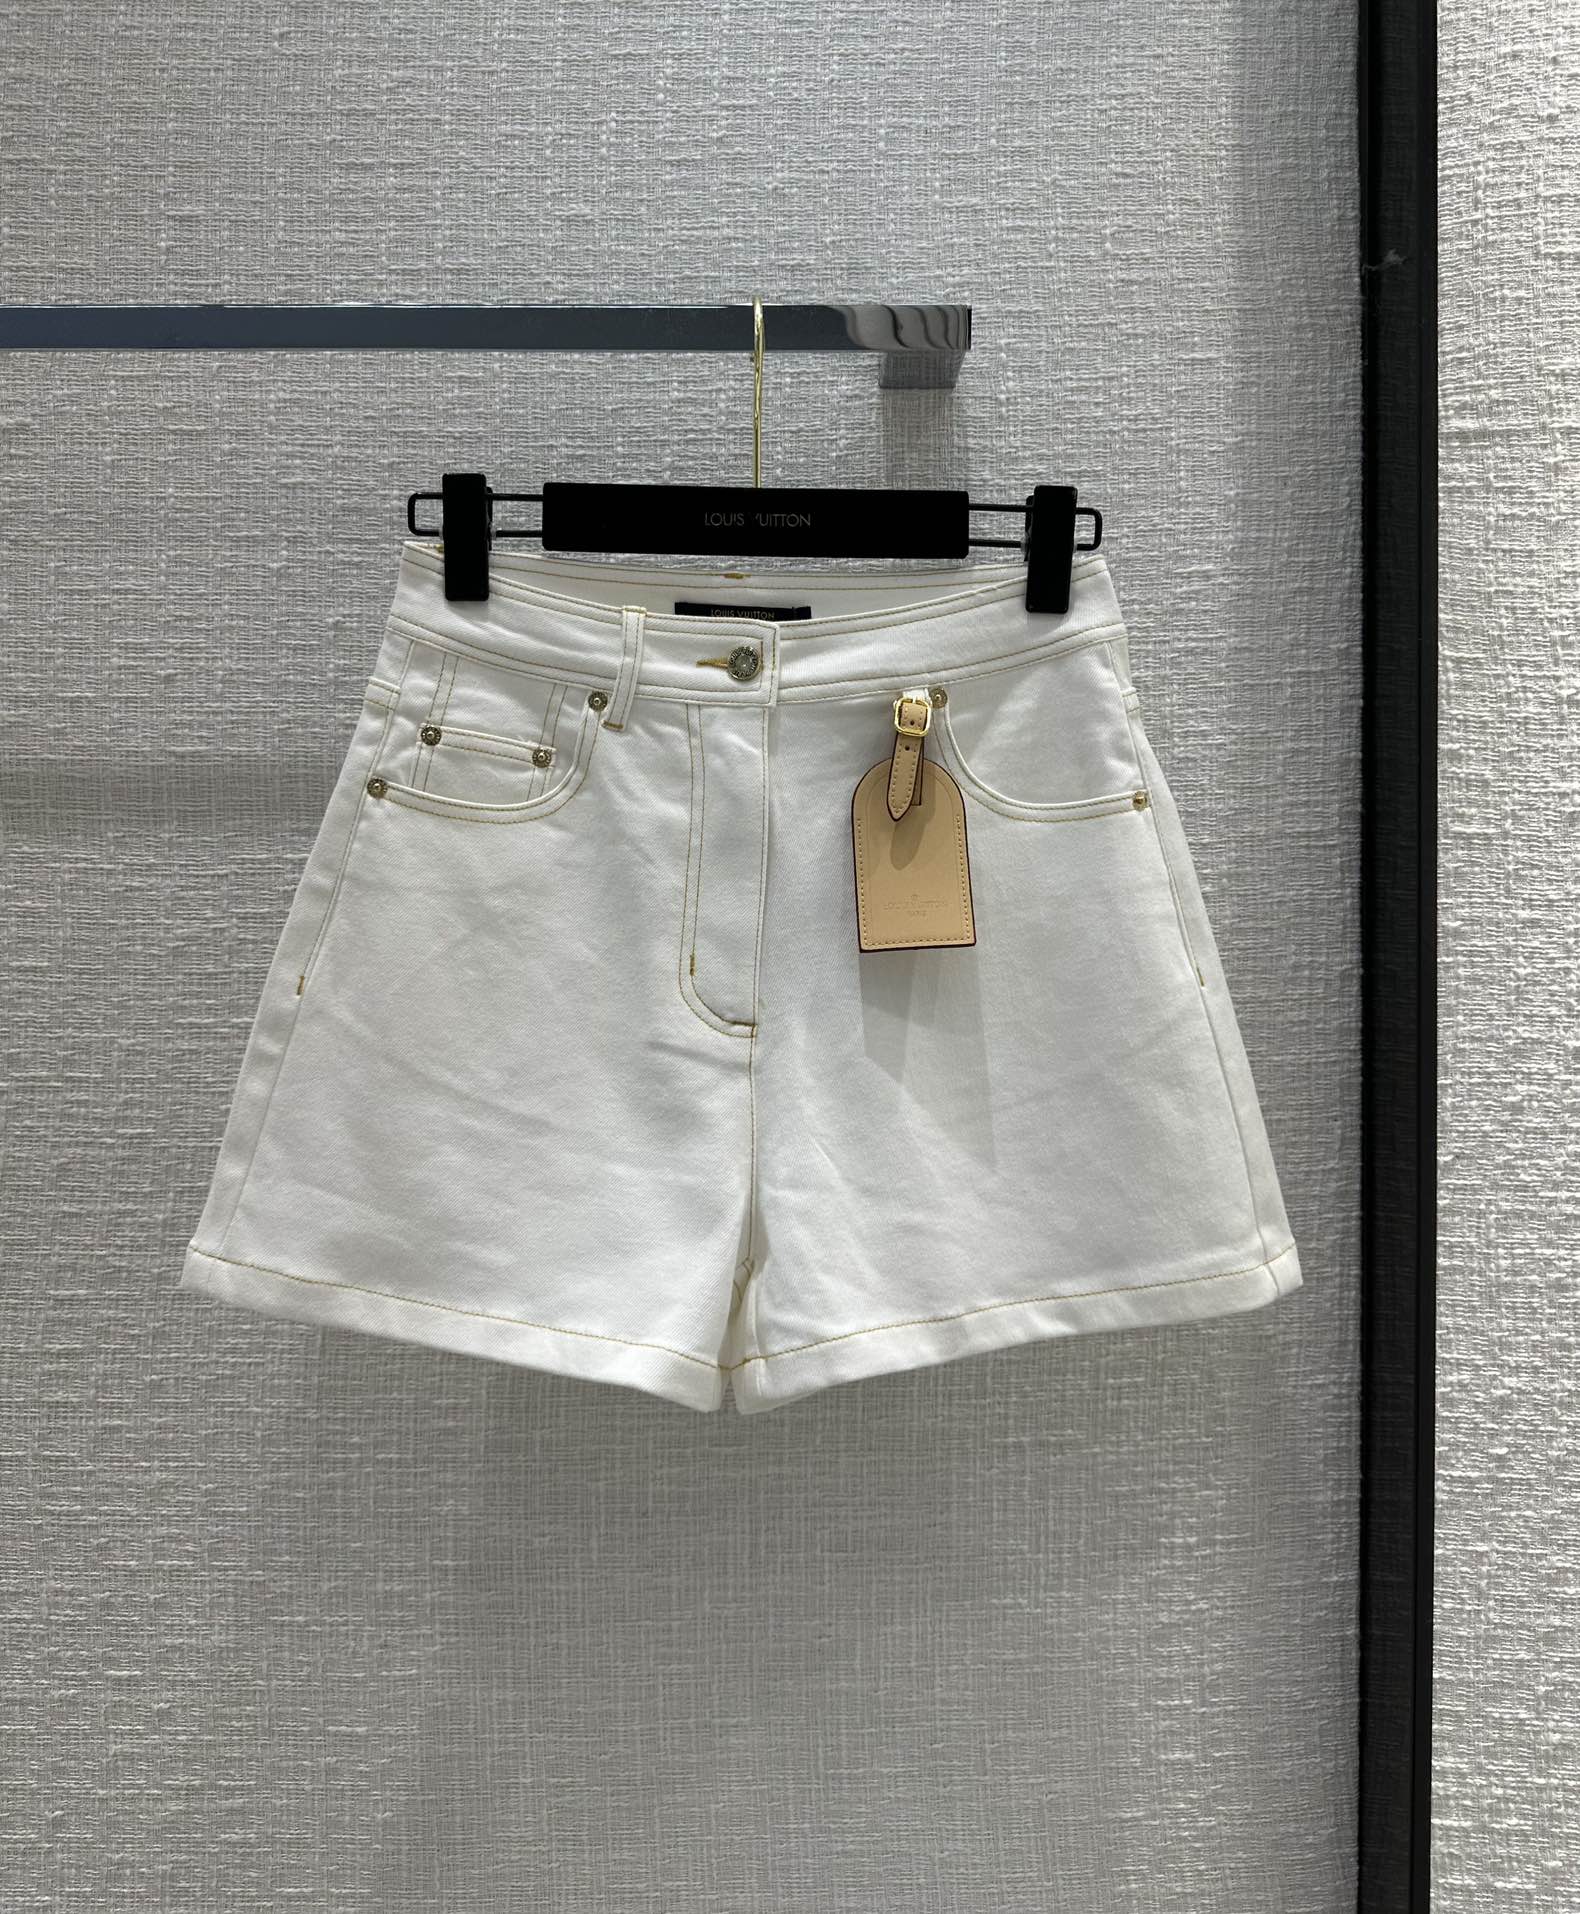 Louis Vuitton Clothing Jeans Shorts White Cotton Denim Fall Collection Vintage